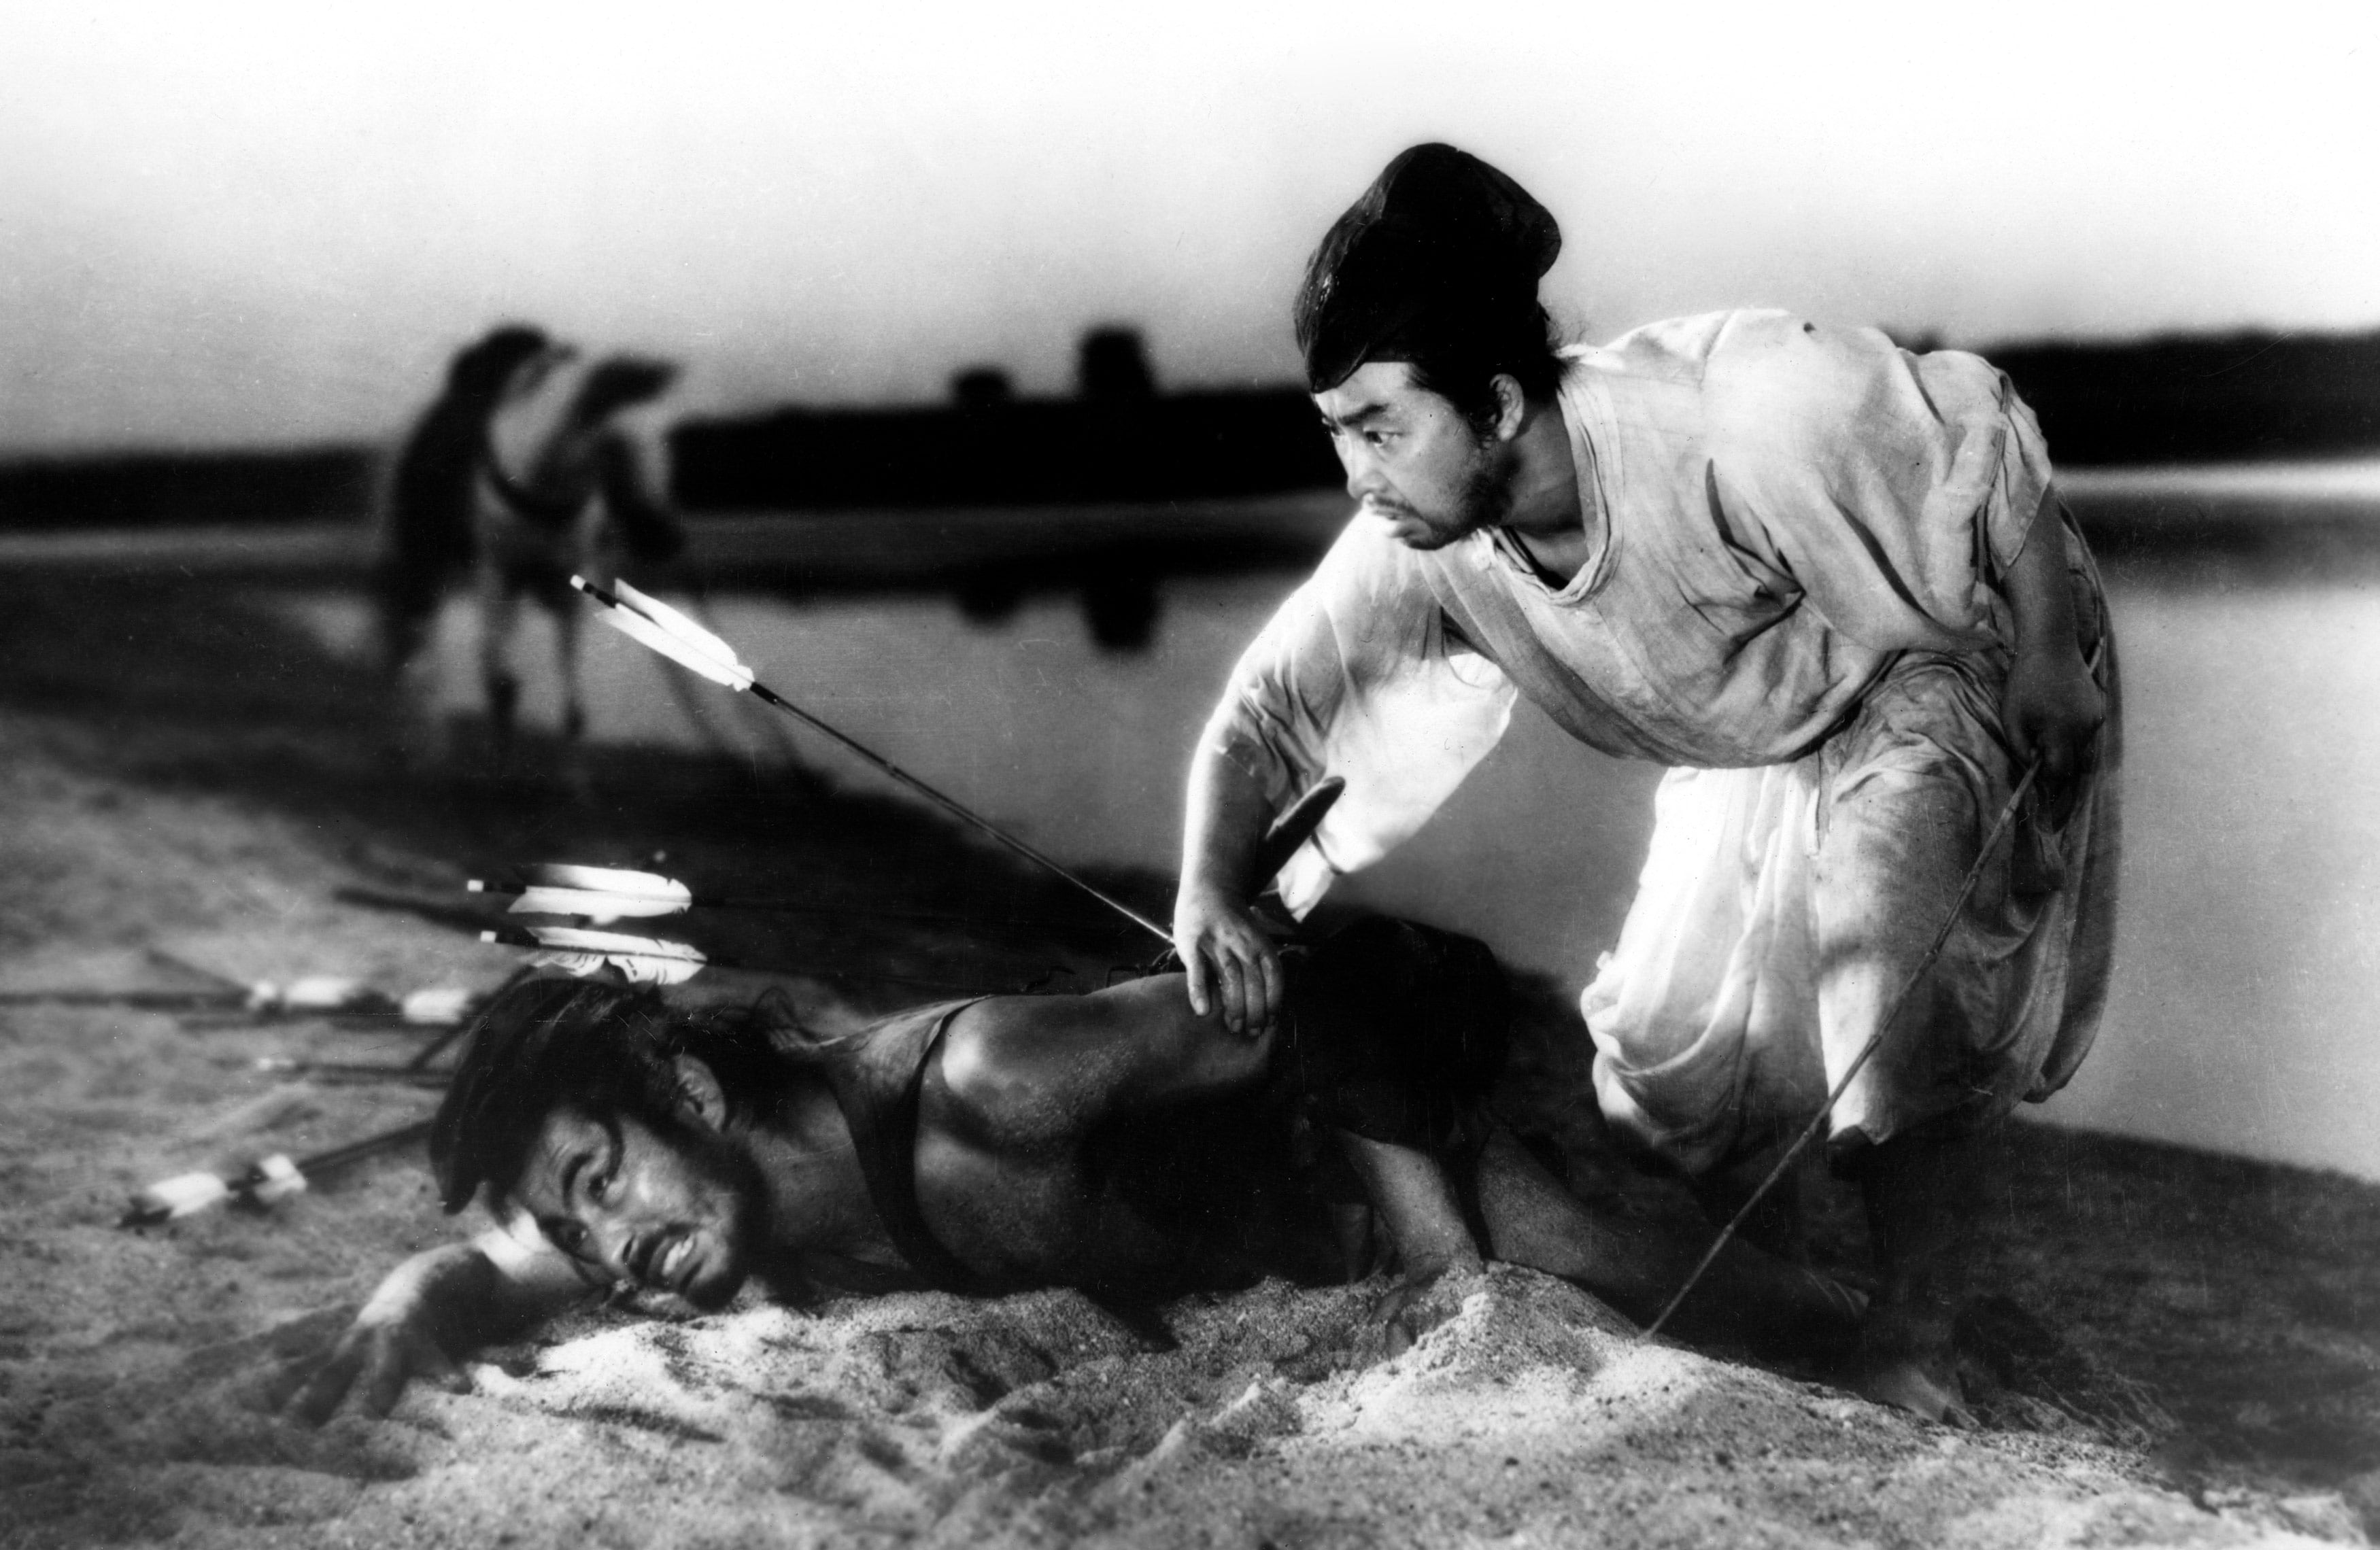 Press photo of Toshiro Mifune and Daisuke Katō from the movie Rashomon